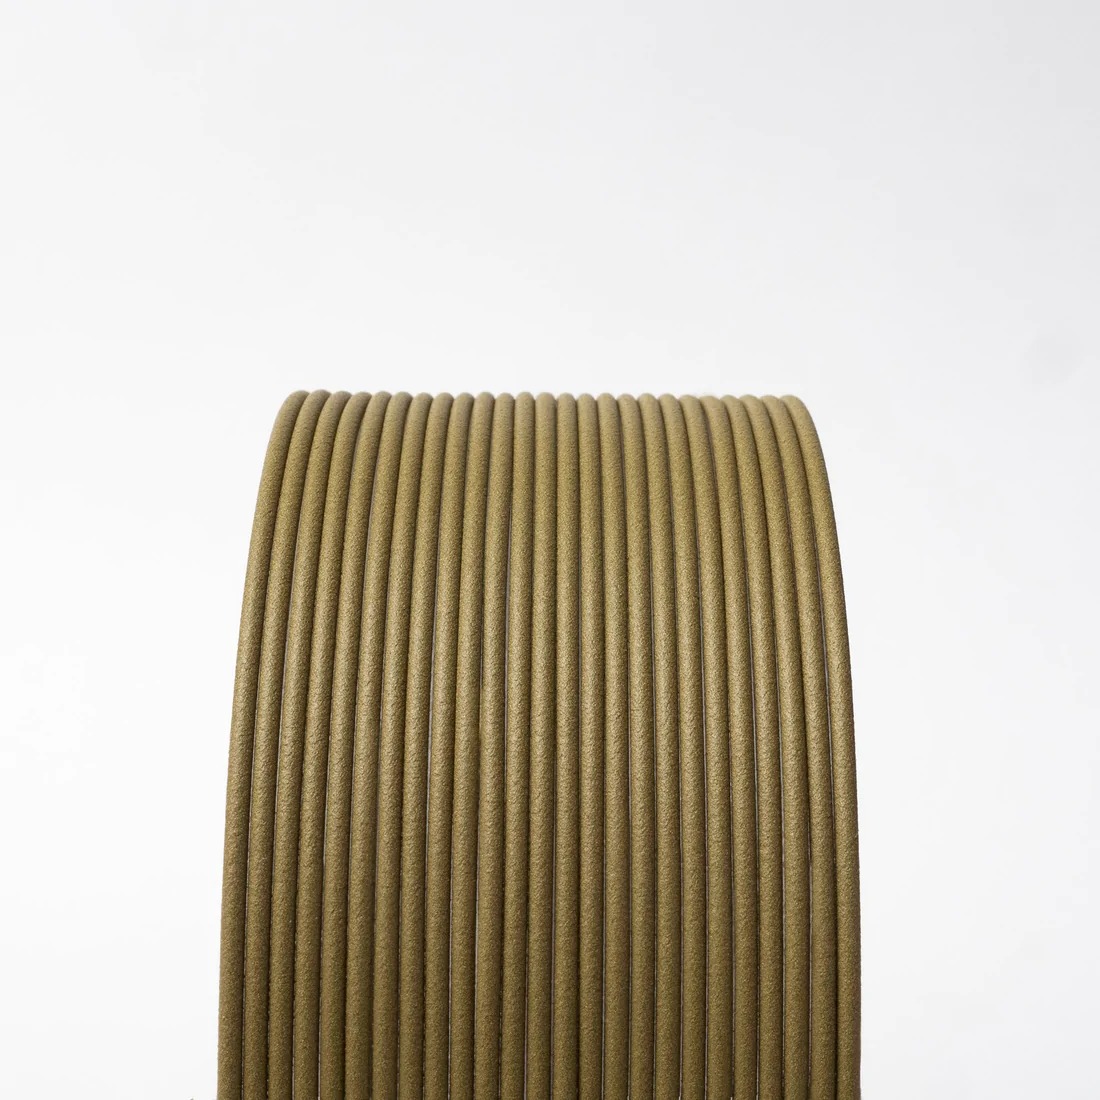 Proto-Pasta Brass Filled Composite PLA 2.85mm 3D printer filament